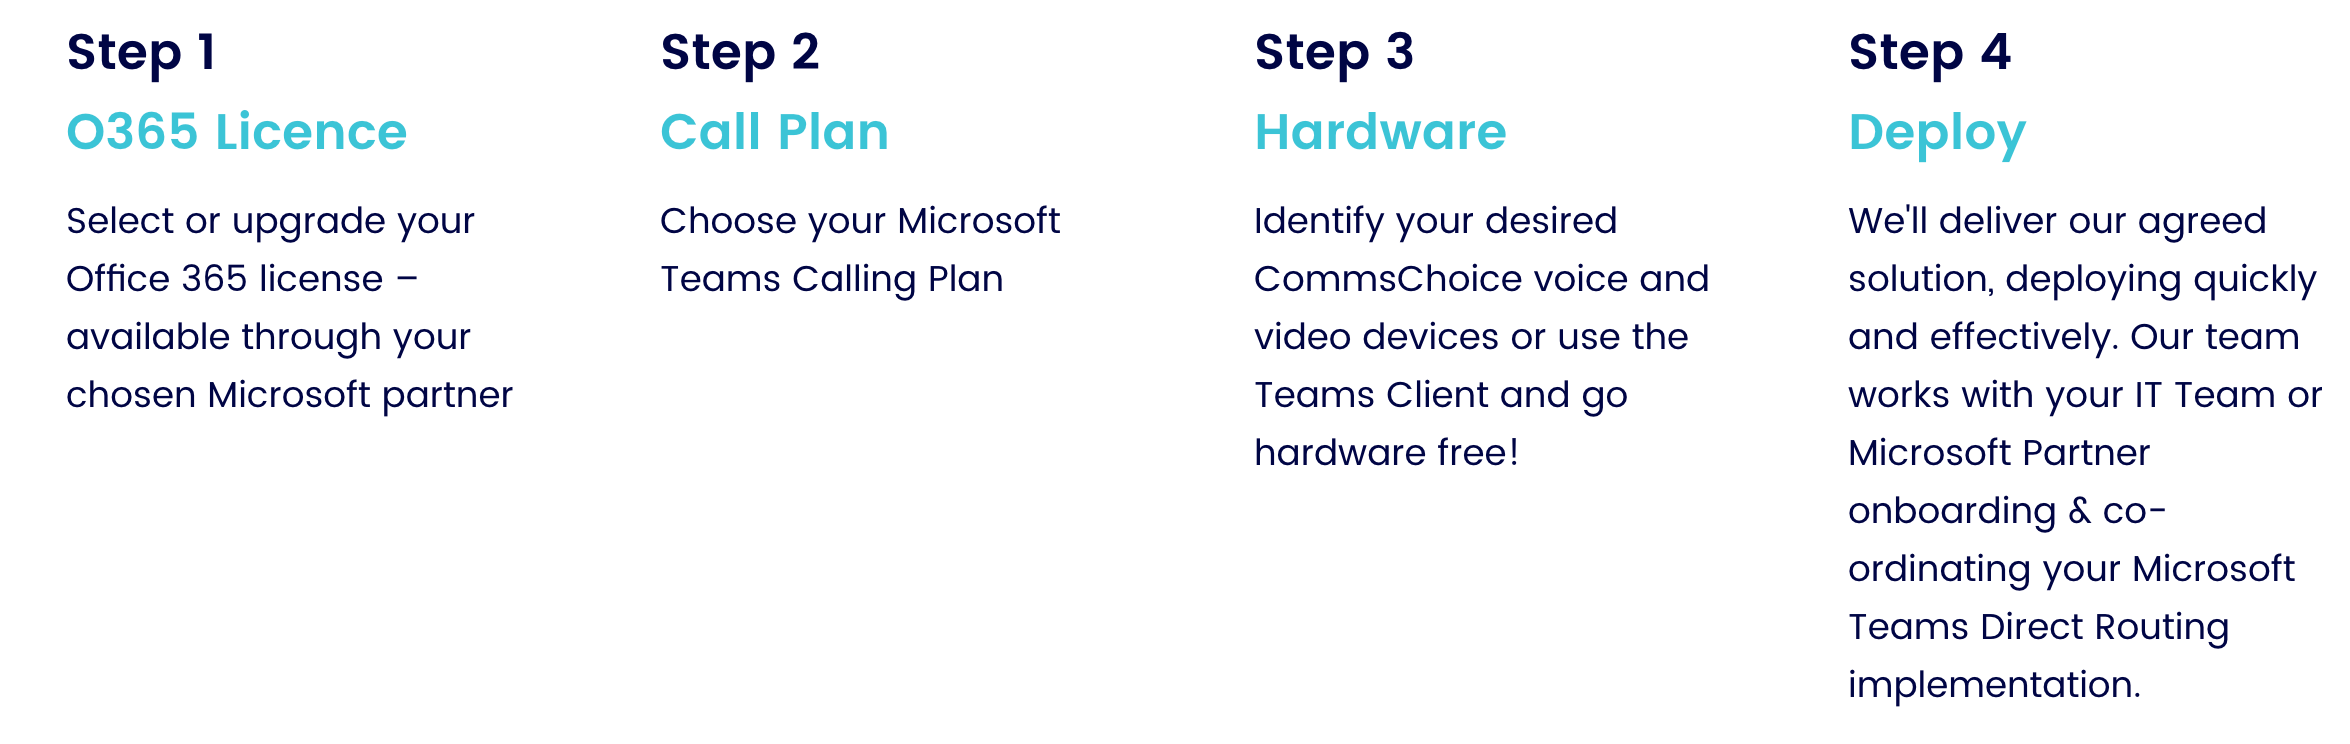 Microsoft Teams phone system deployment steps